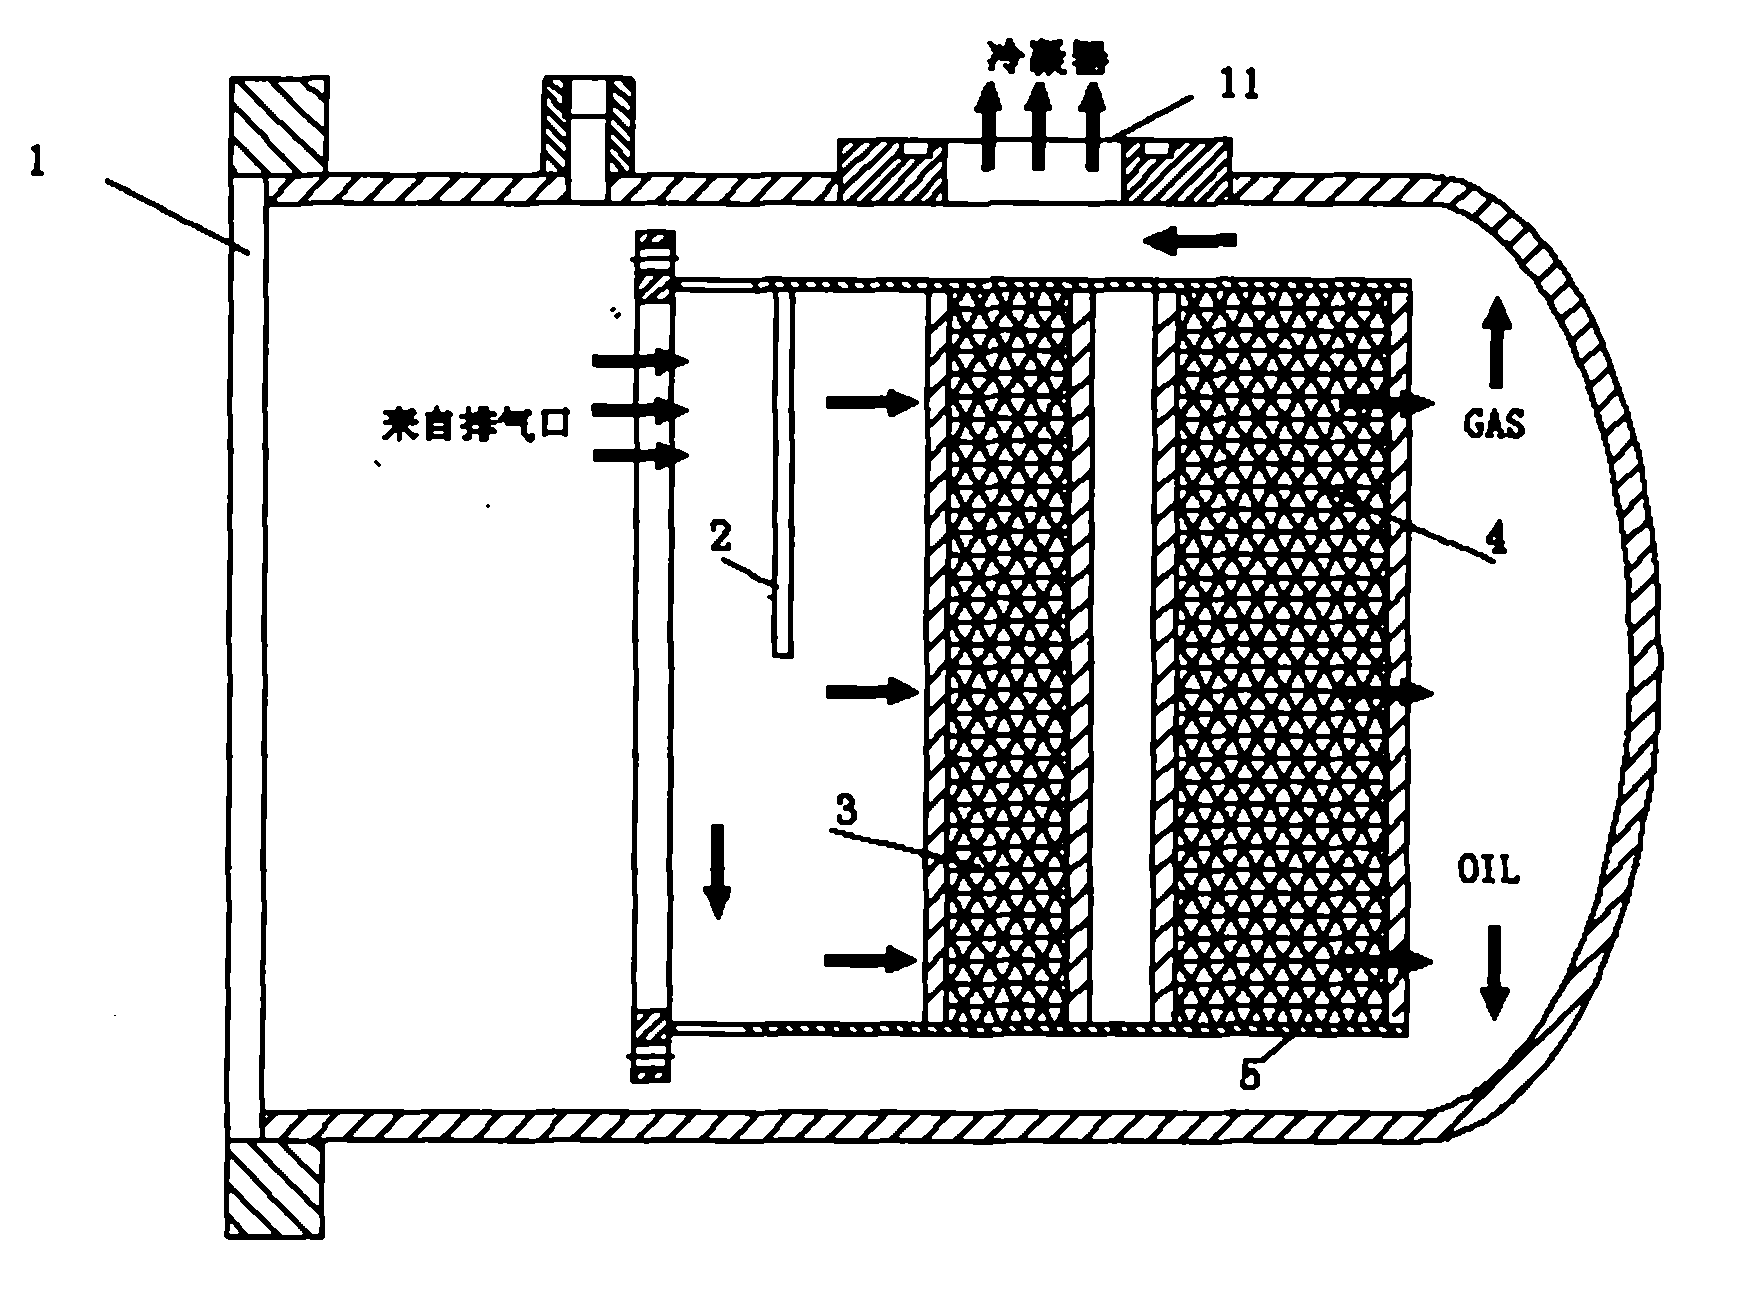 Oil separator in compressor